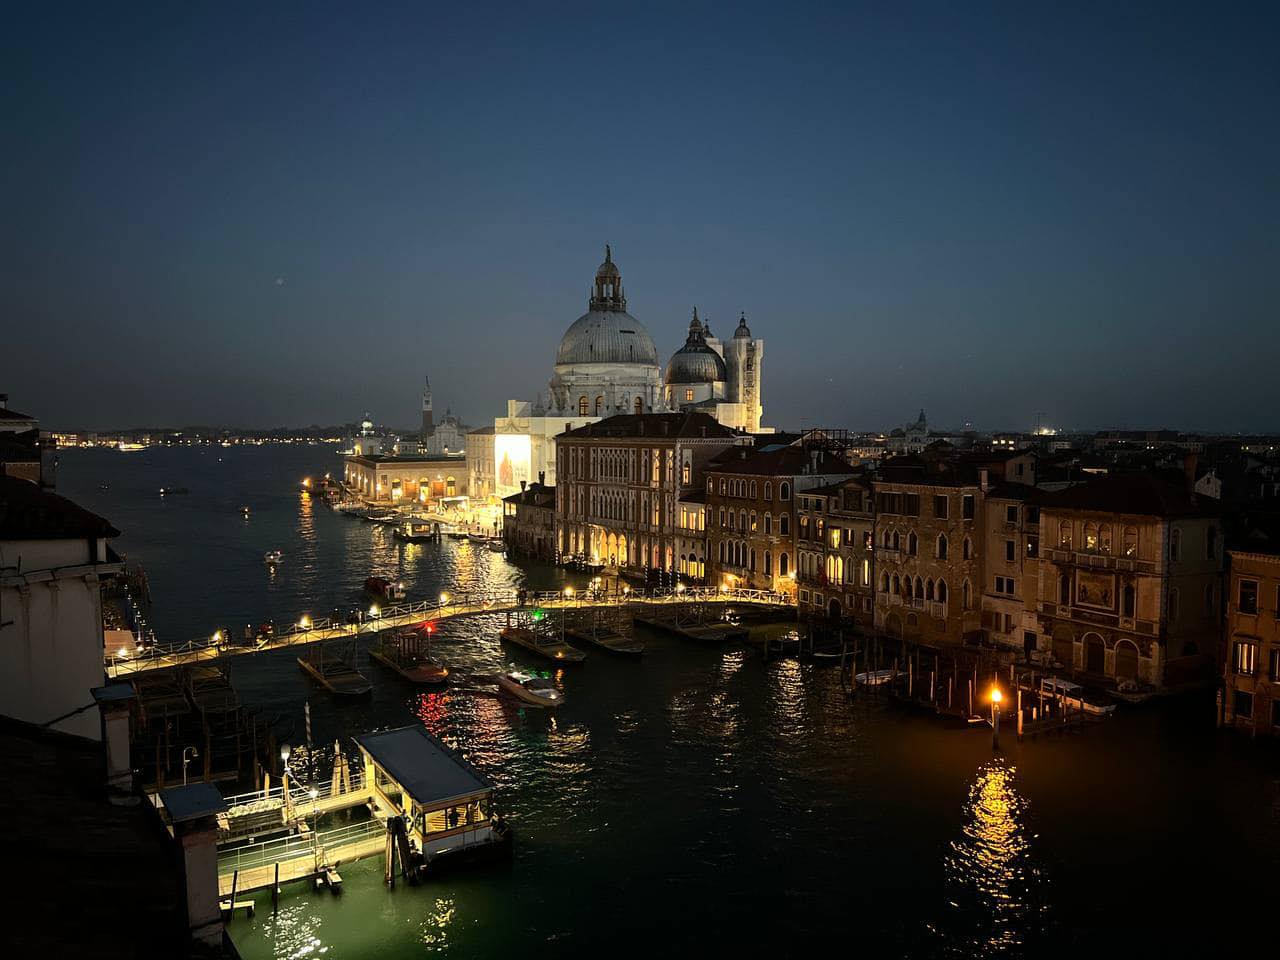 Venezia acqua alta due metri, ma la città è salva grazie al Mose